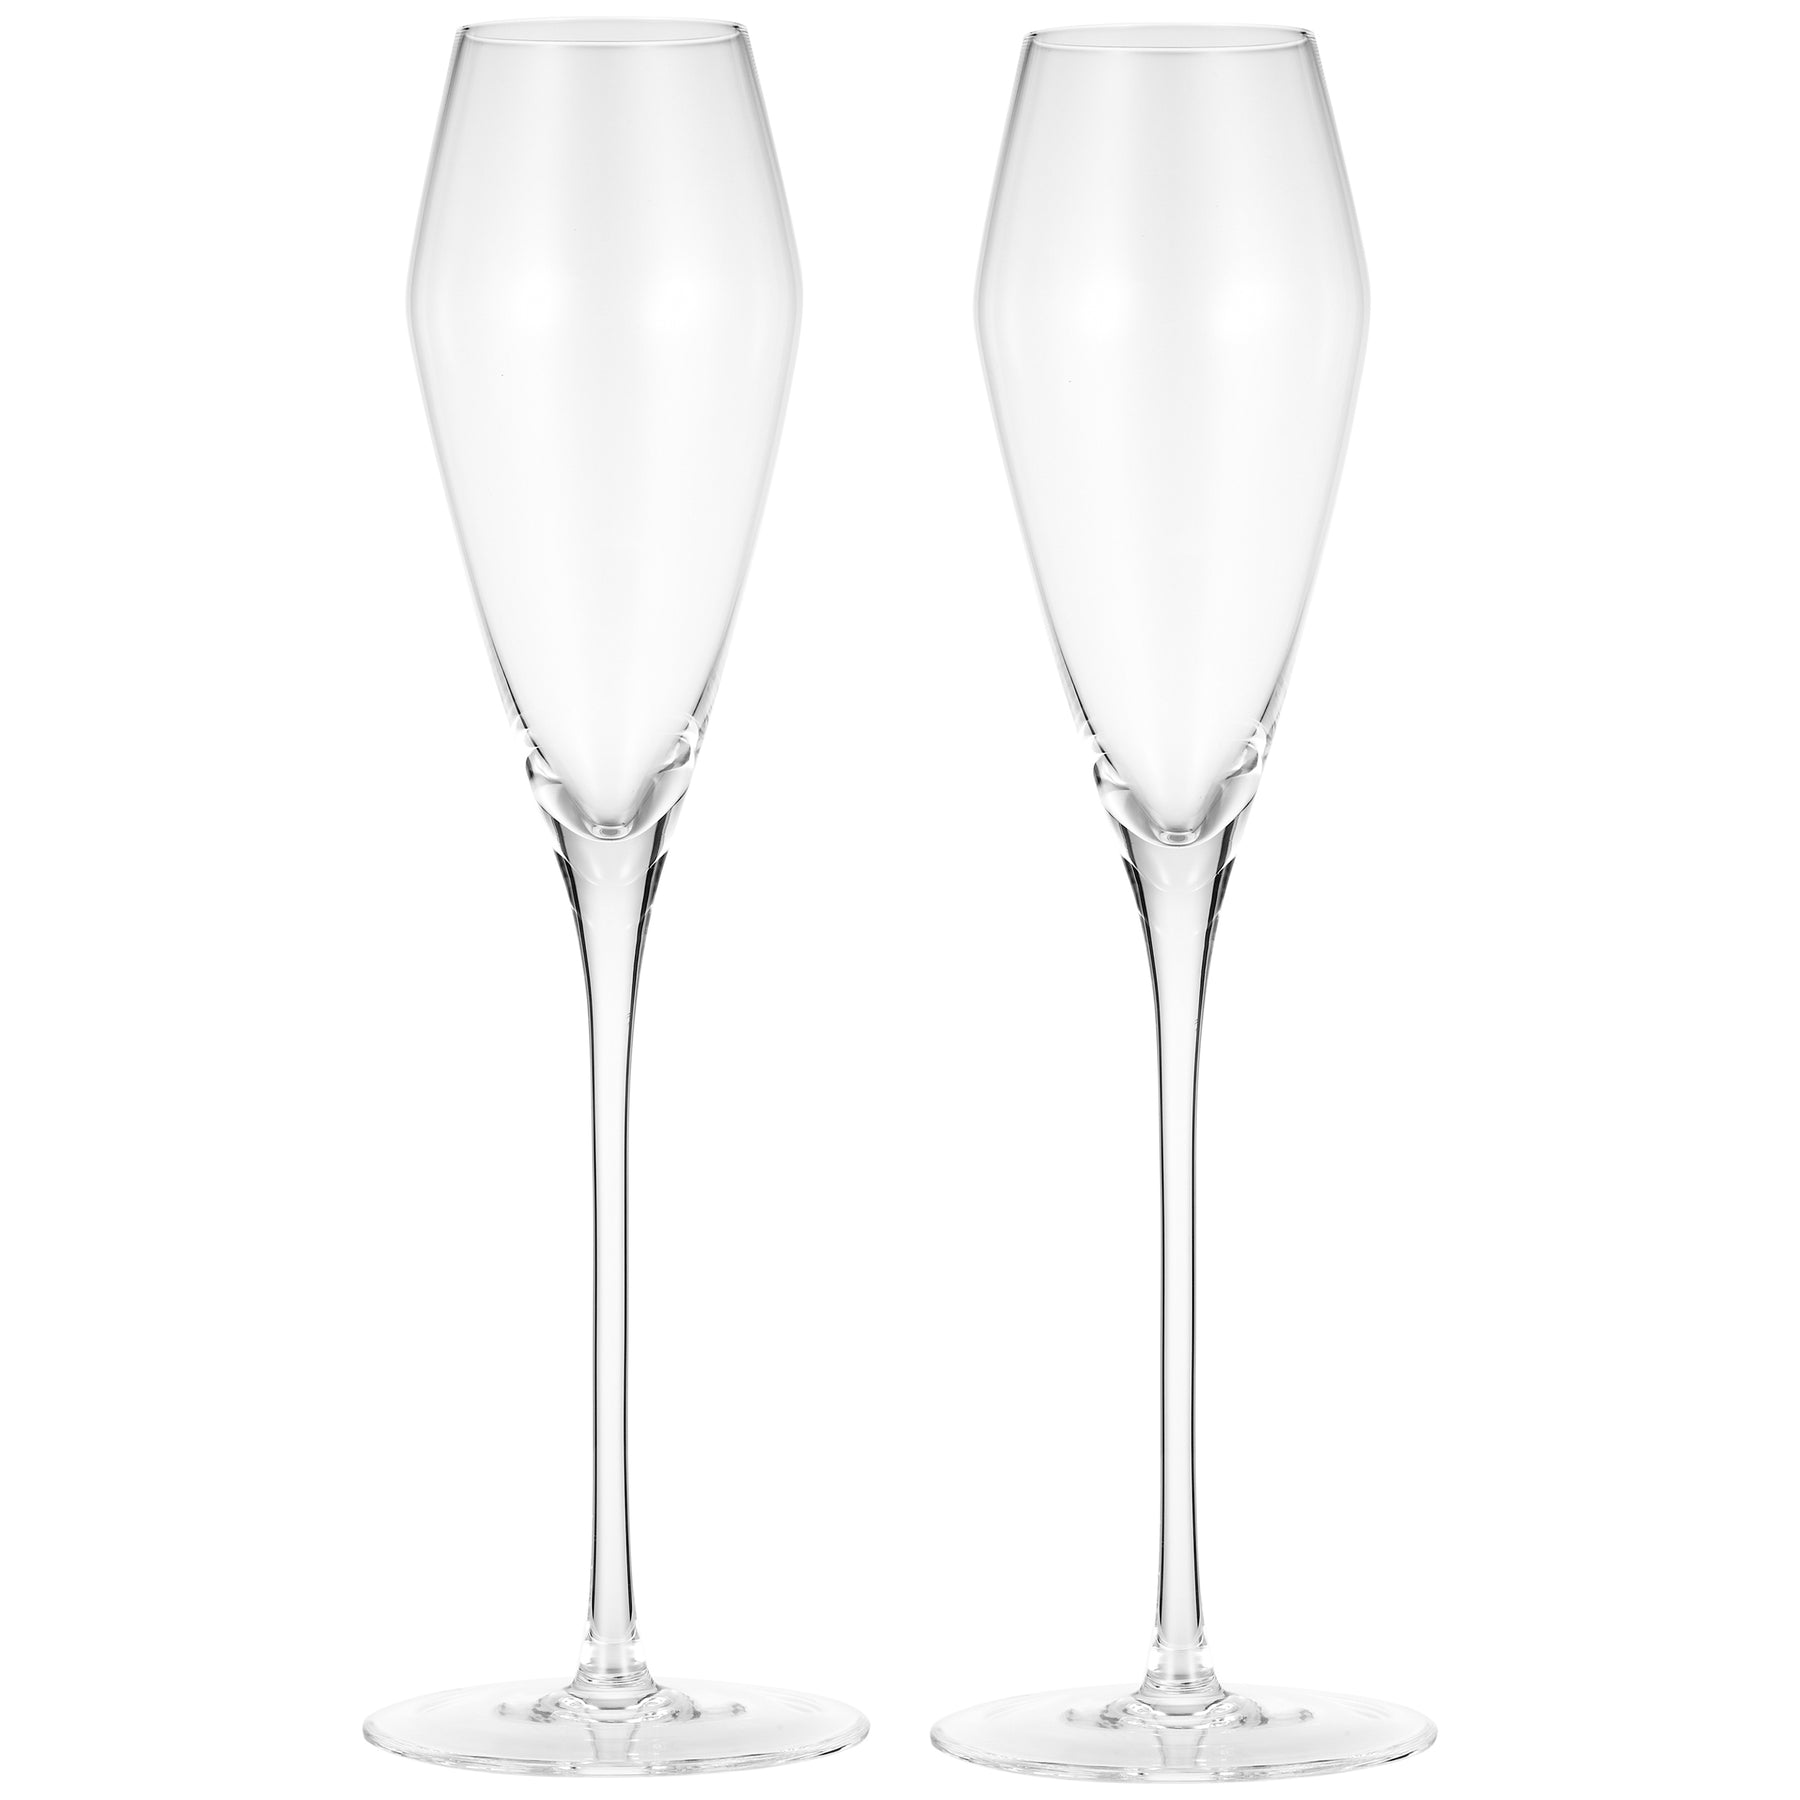 BERKWARE Premium Champagne Flutes - Crystal Tulip Champagne  Glasses - 7.7 oz each (Set of 2): Champagne Glasses